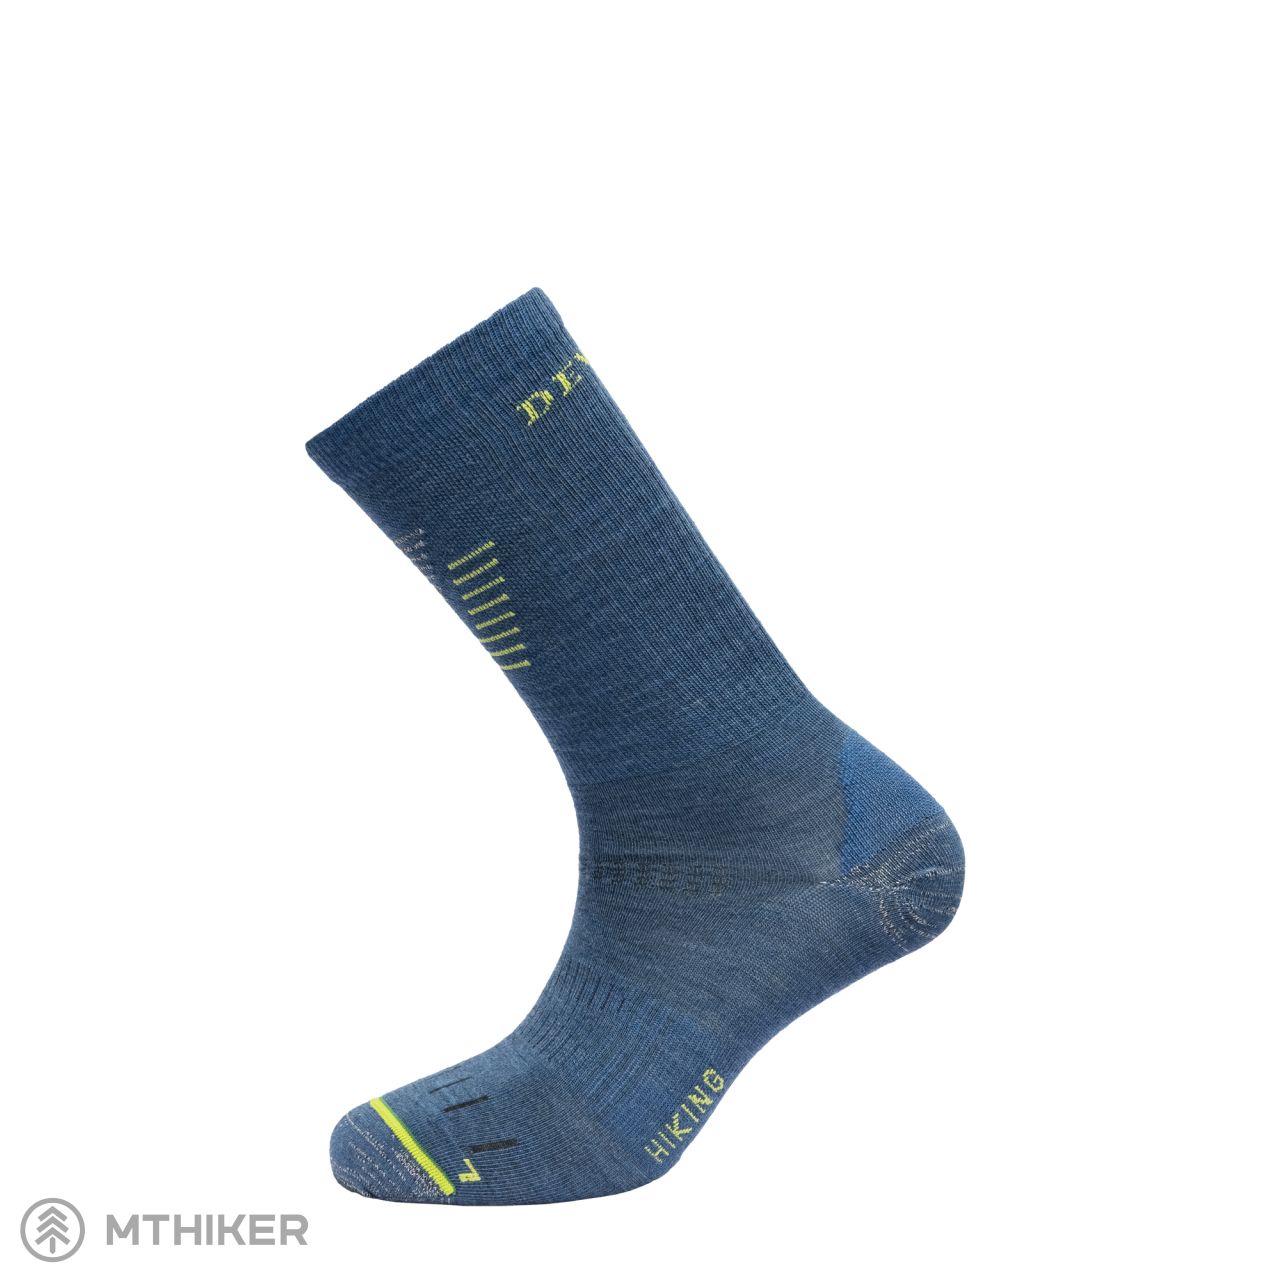 Hiking Merino Light Wool Socks Blue - MTBIKER.shop